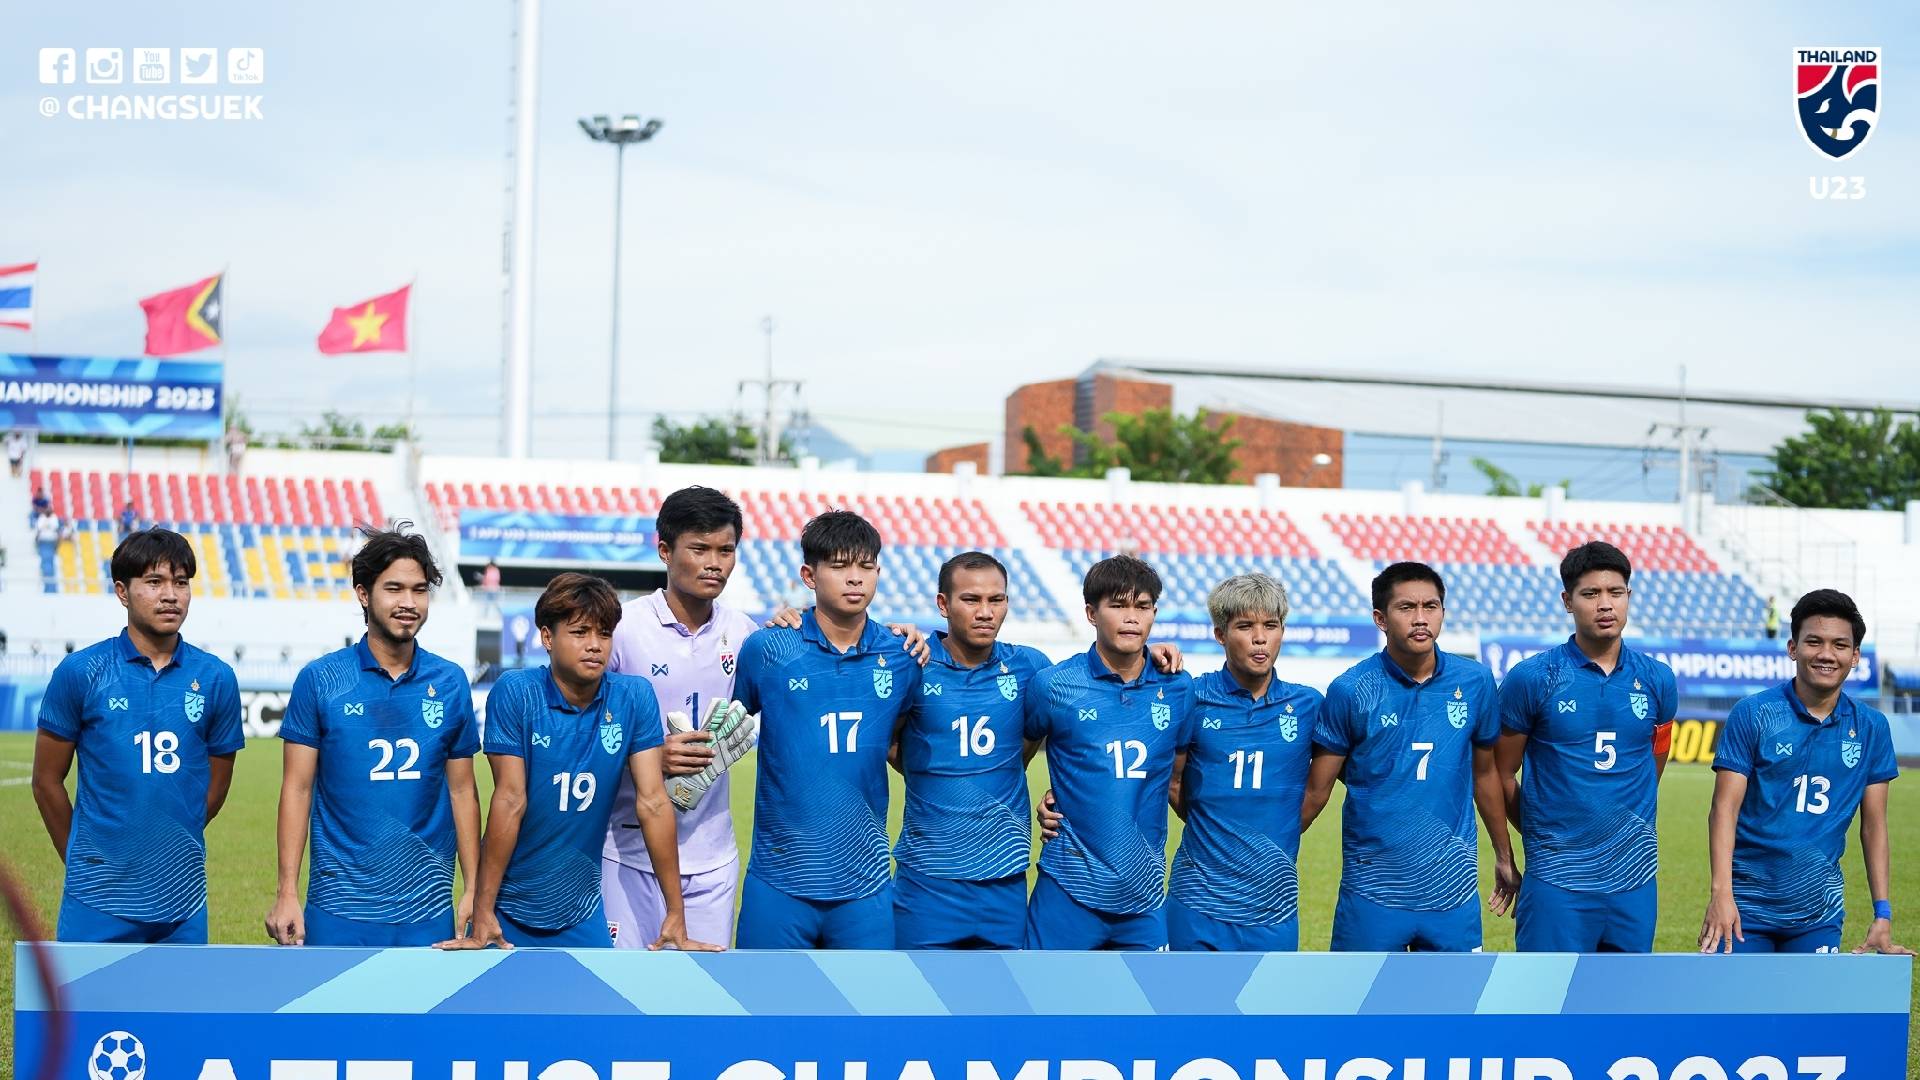 B 23 Thailand Changsuek Thailand Sasar Layak Ke Piala Asia B-23